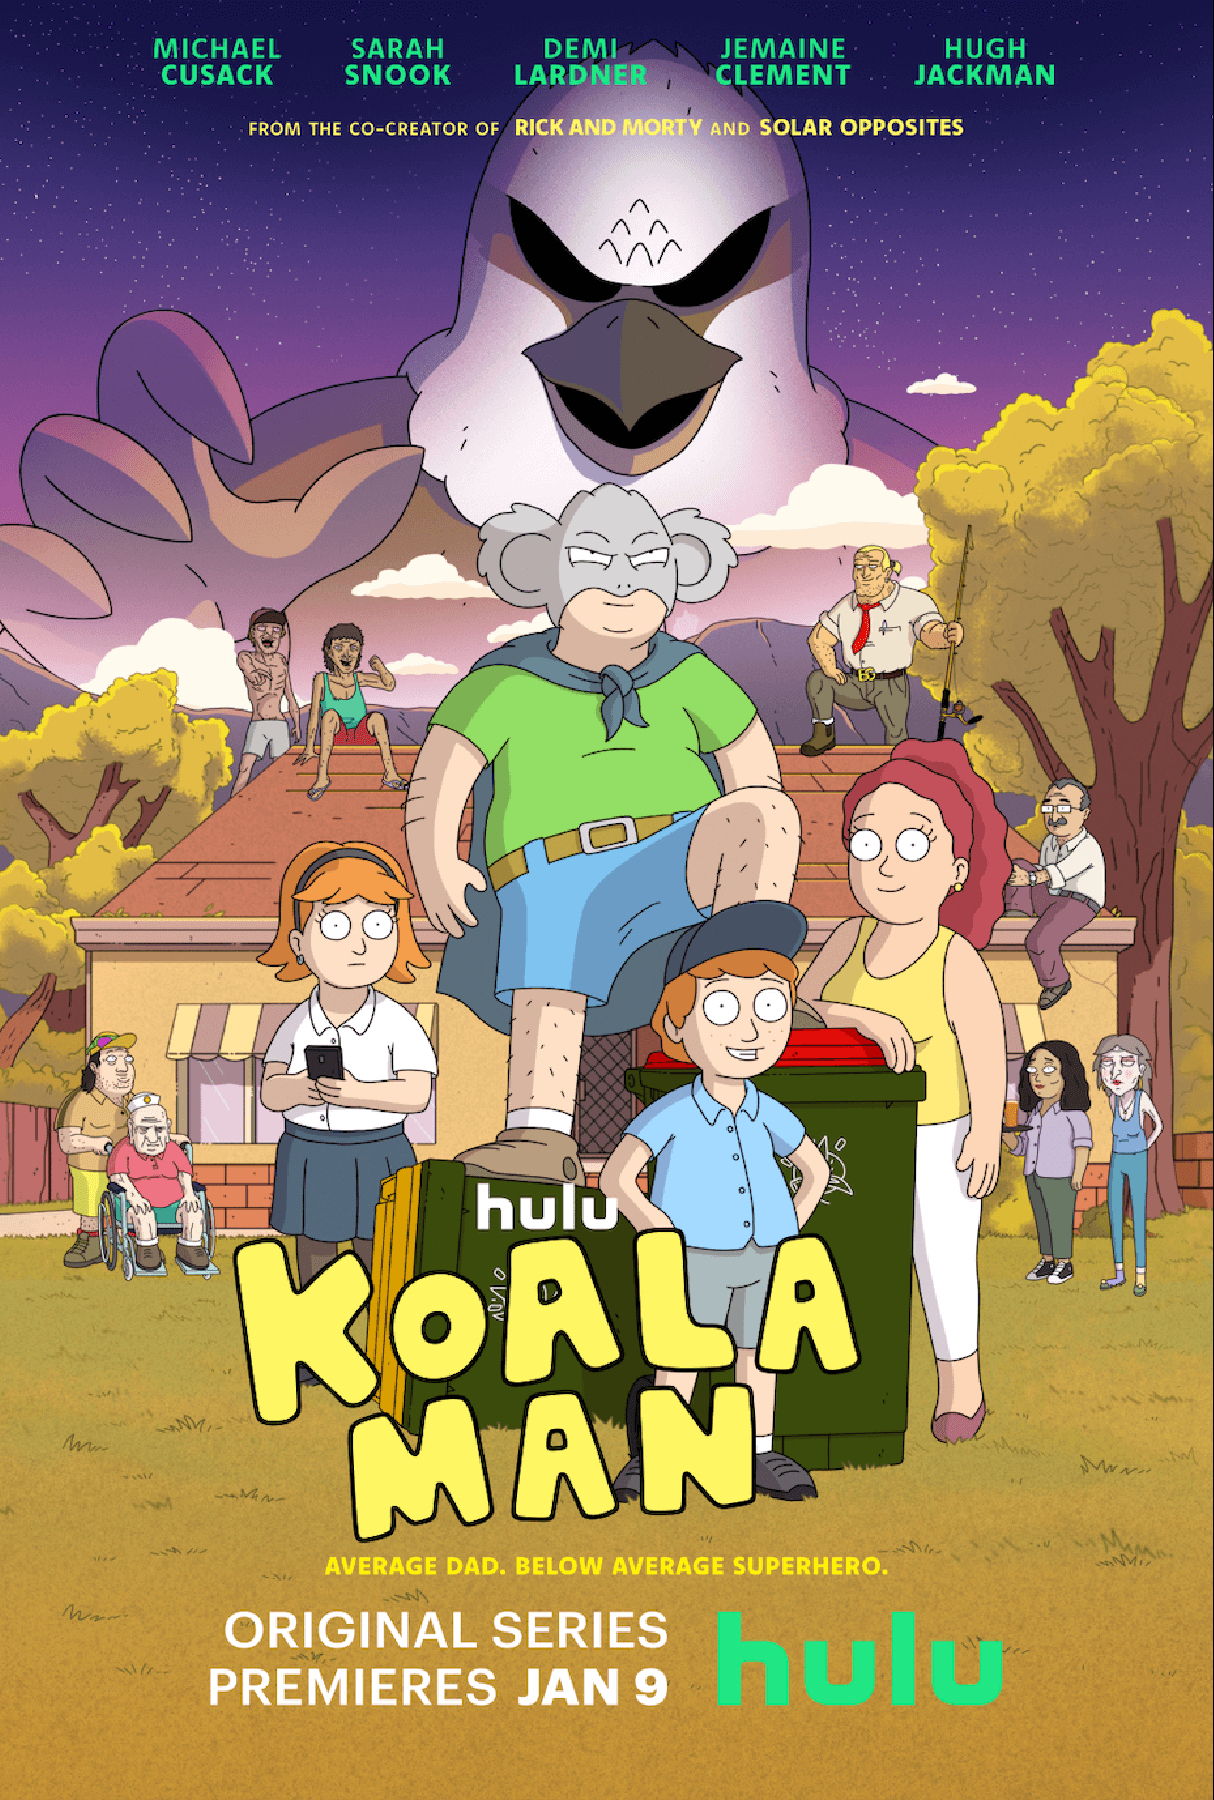 se anuncia la fecha de lanzamiento de “koala man” hulu/disney+